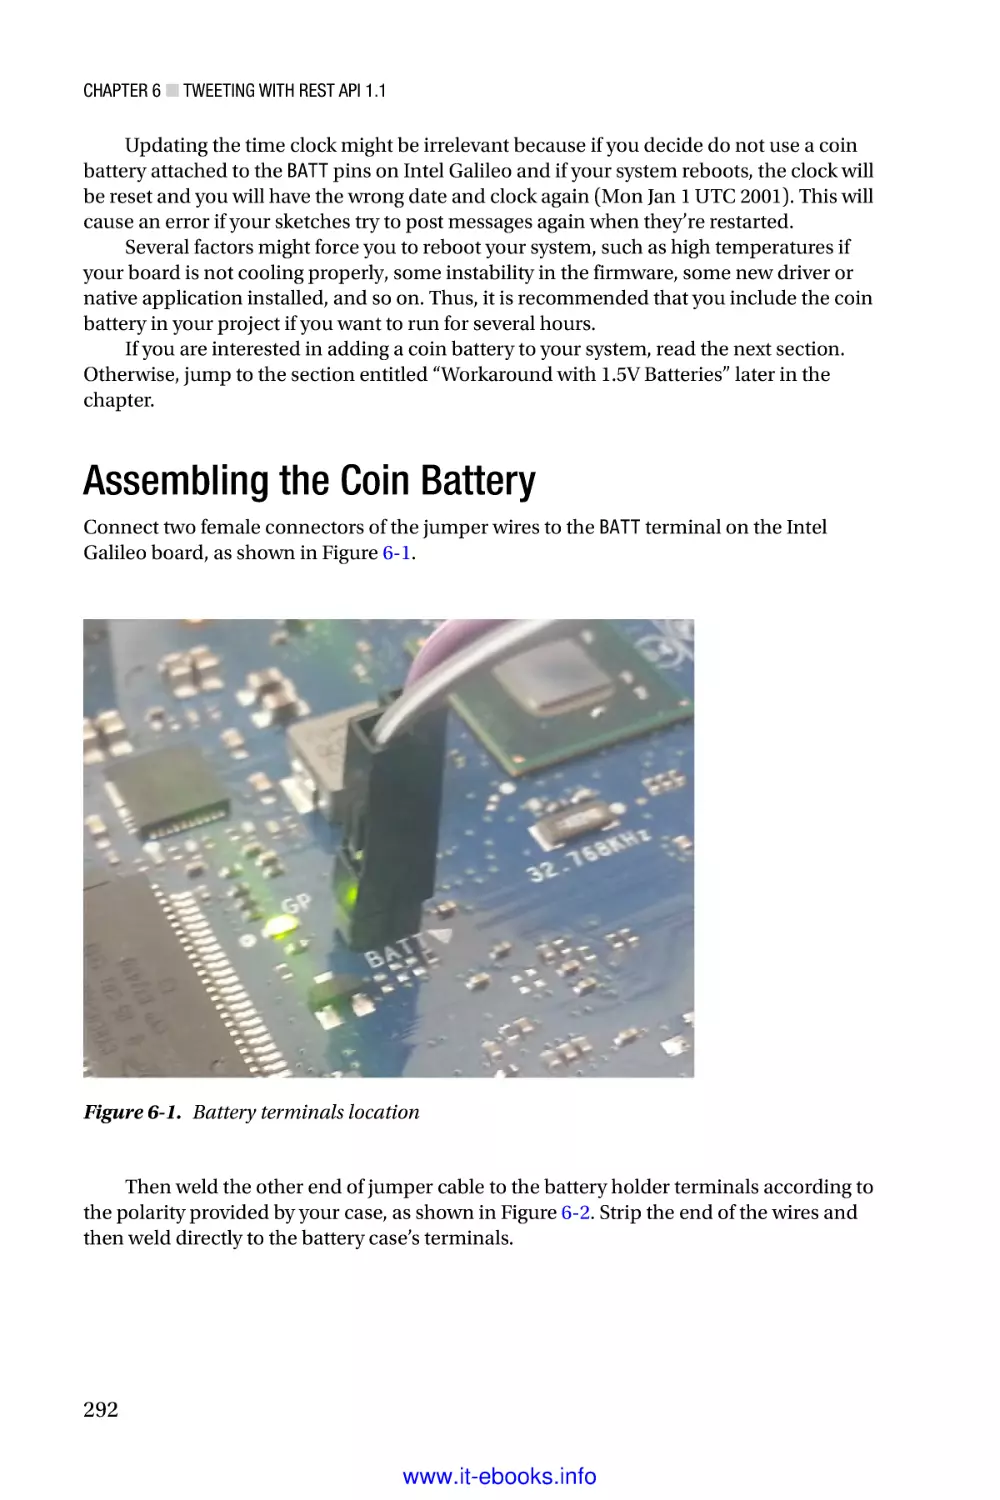 Assembling the Coin Battery